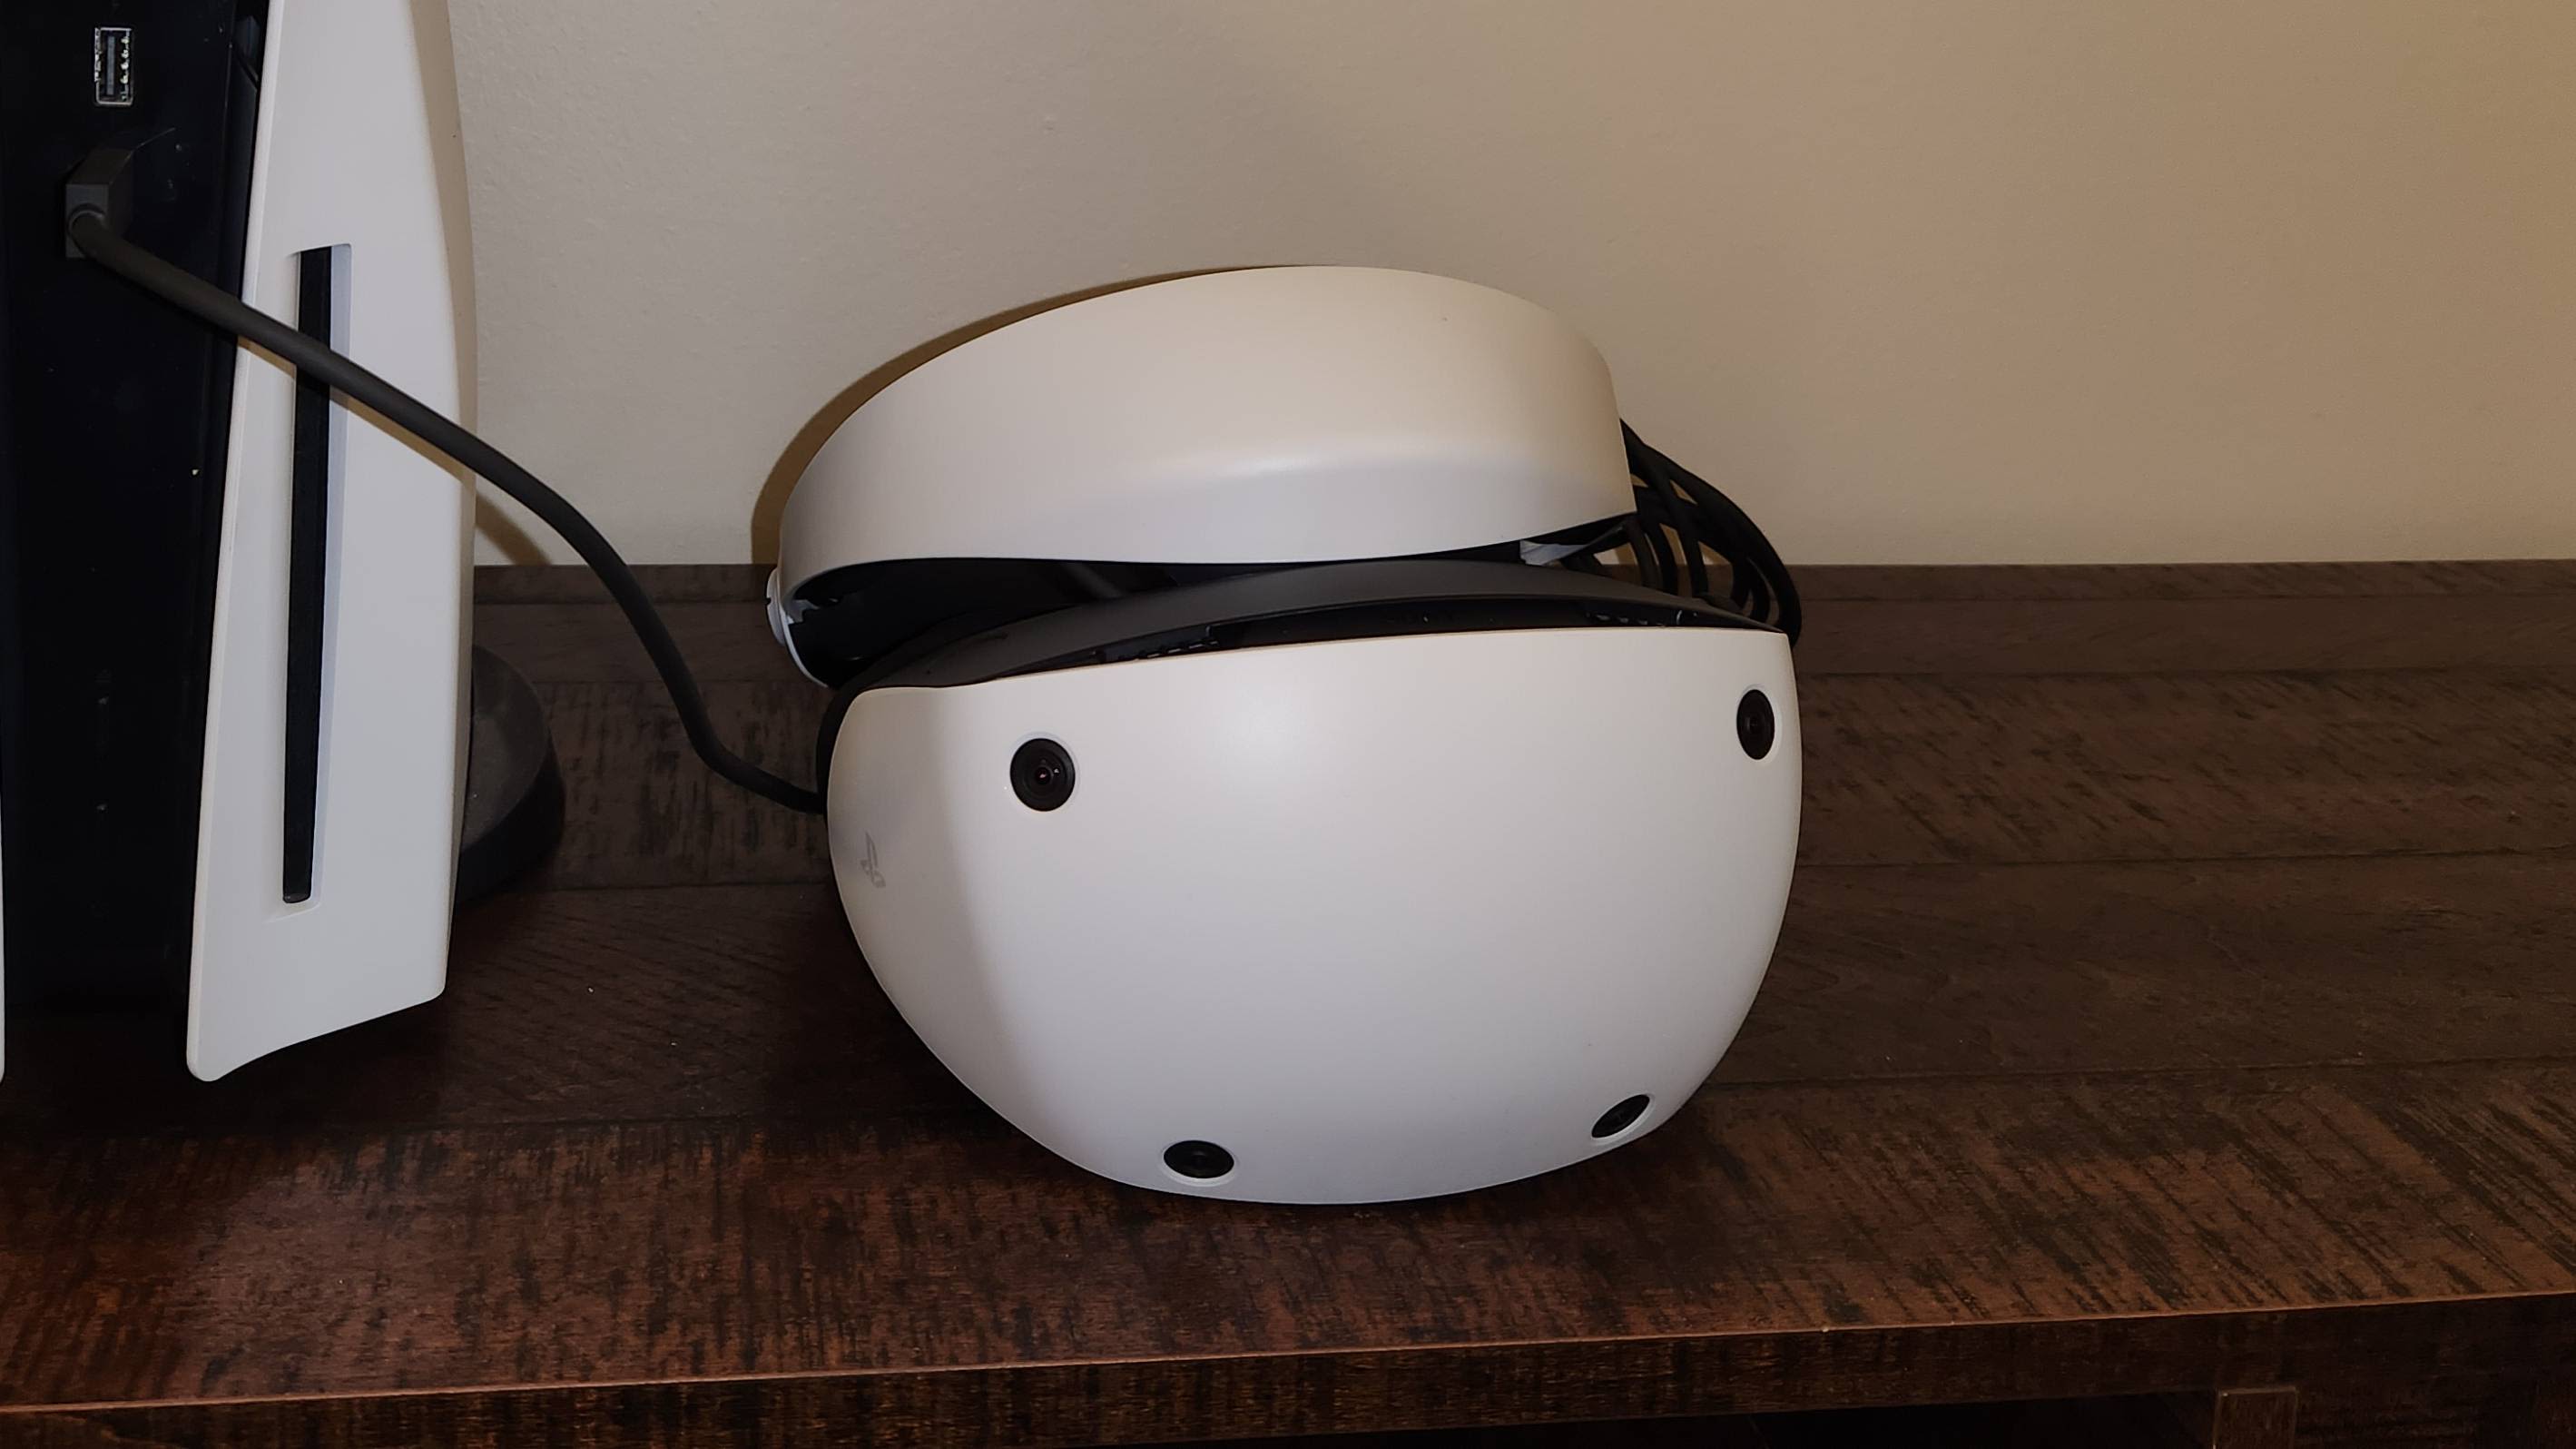 PlayStation VR review: True next-gen VR for a high price CNN Underscored